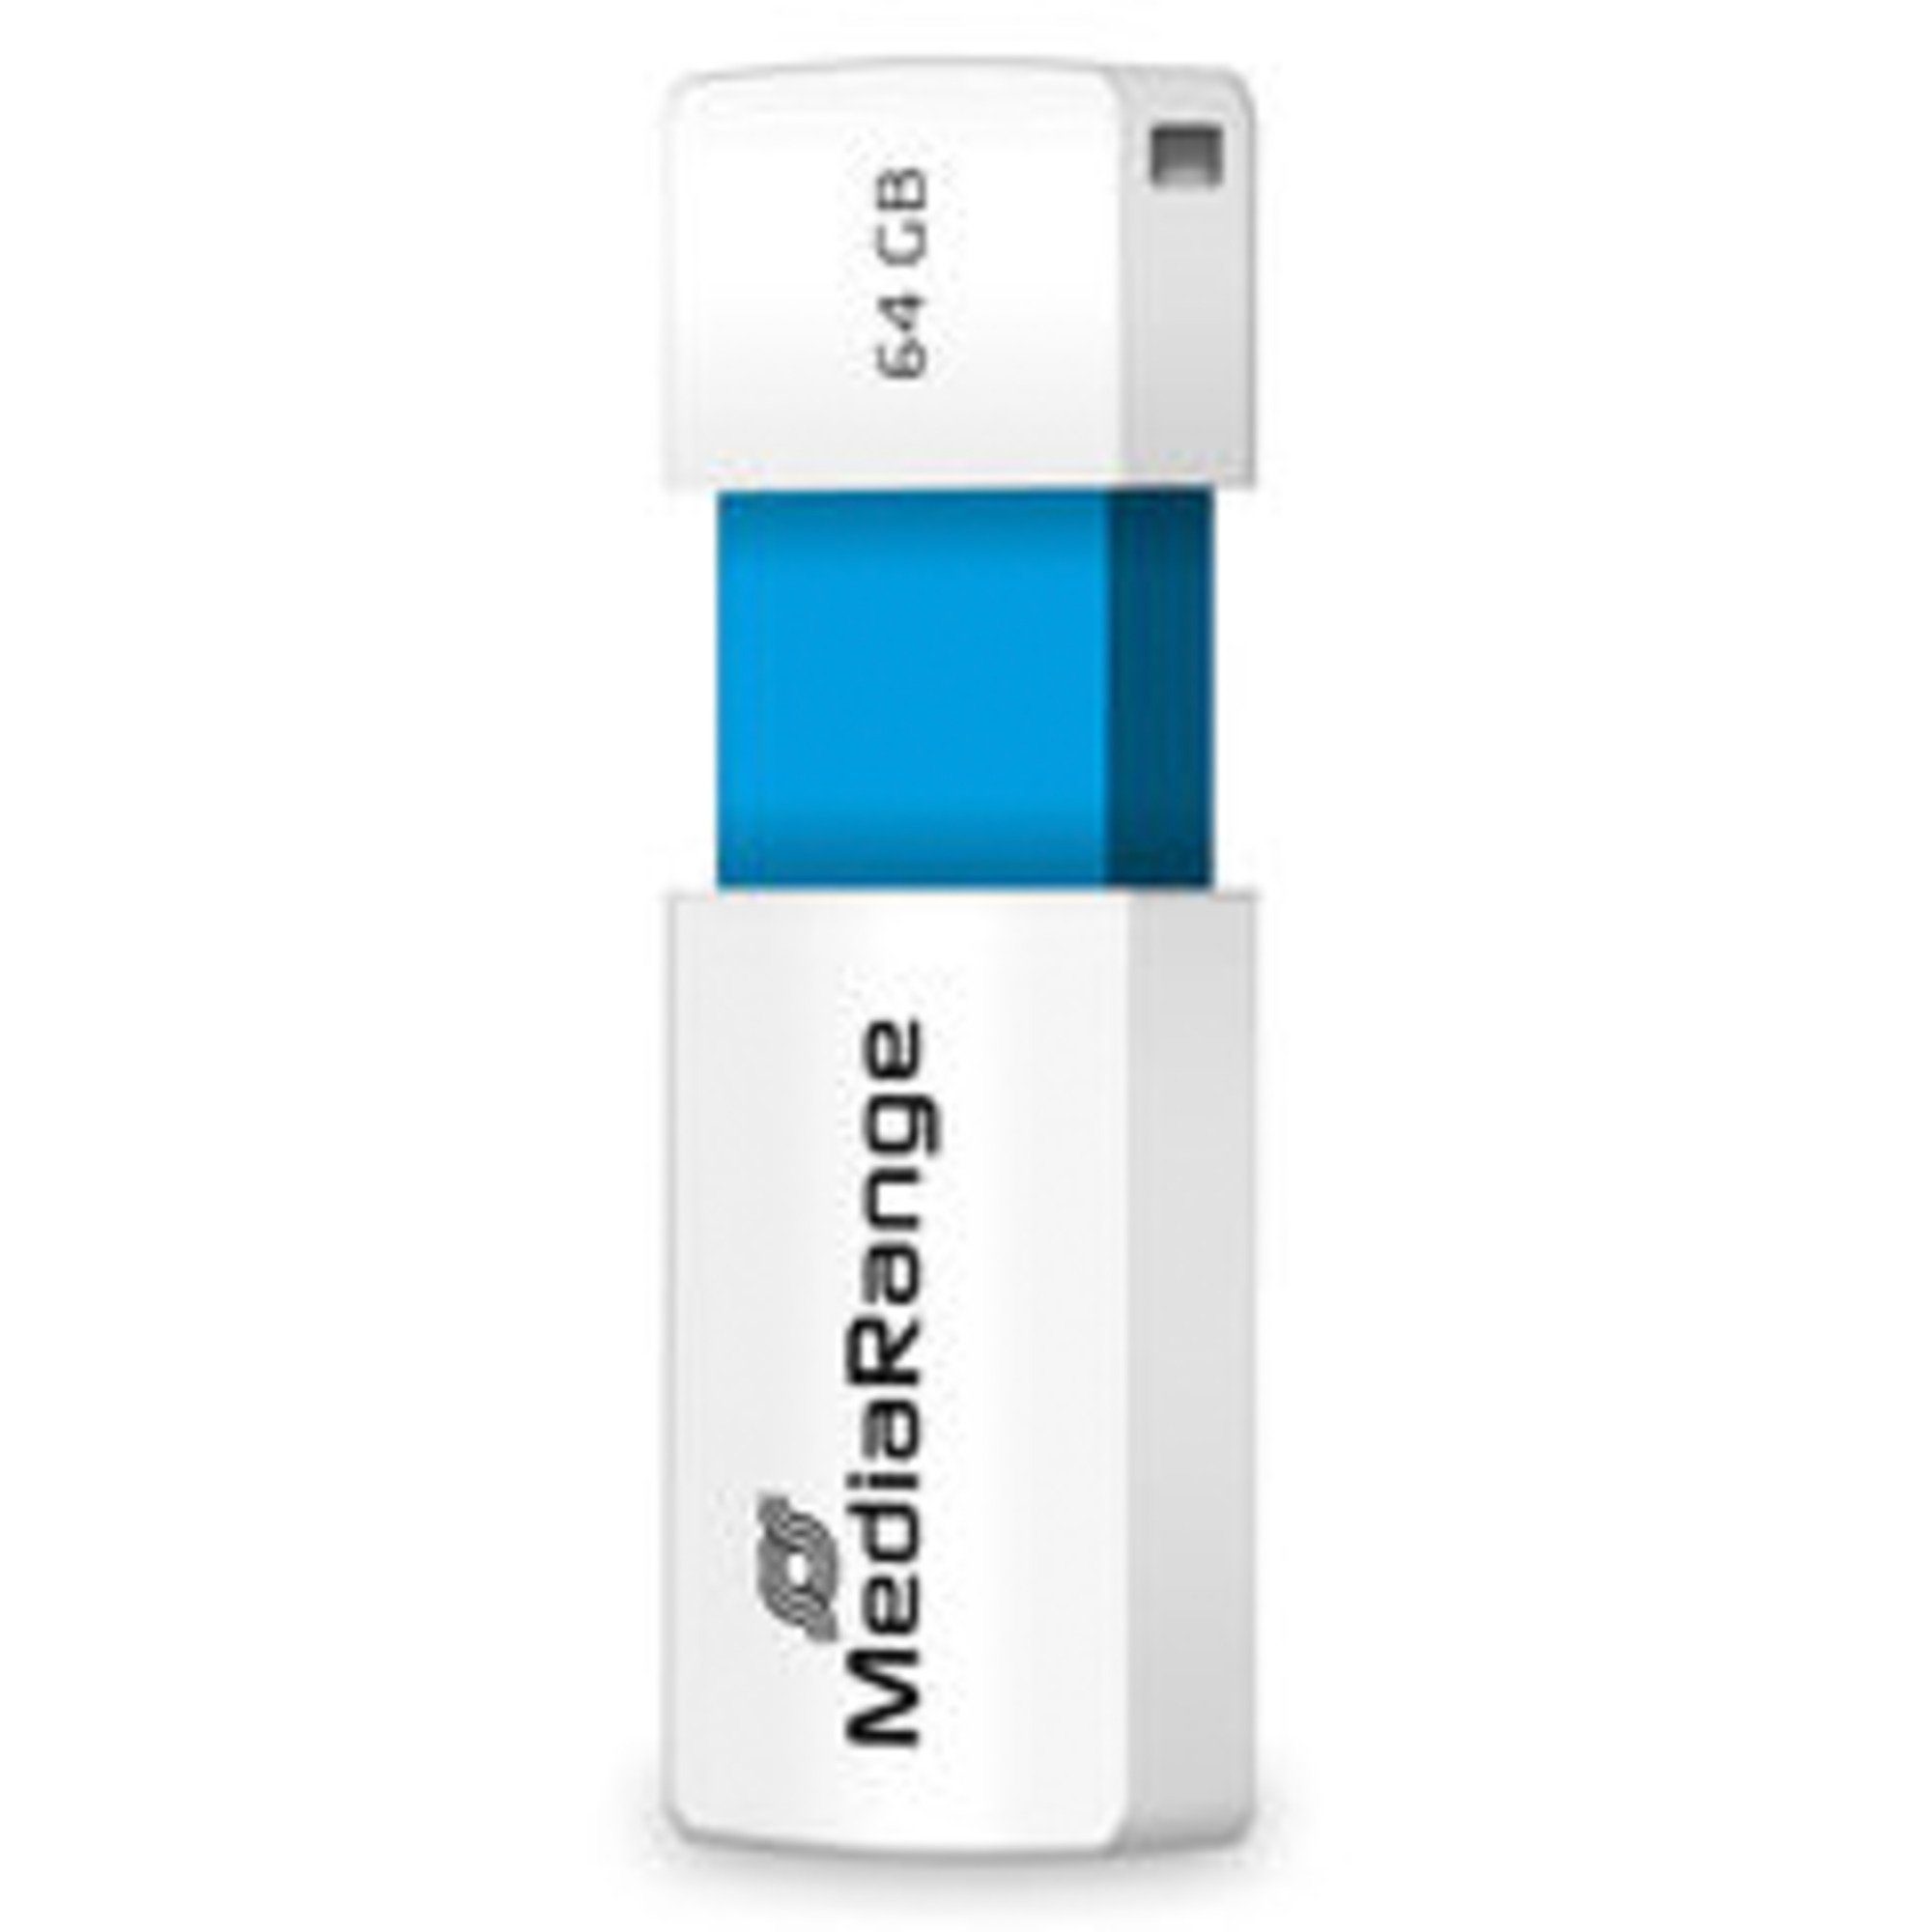 MediaRange 64 Mediarange GB, Color (USB-A USB-Stick USB-Stick, Edition